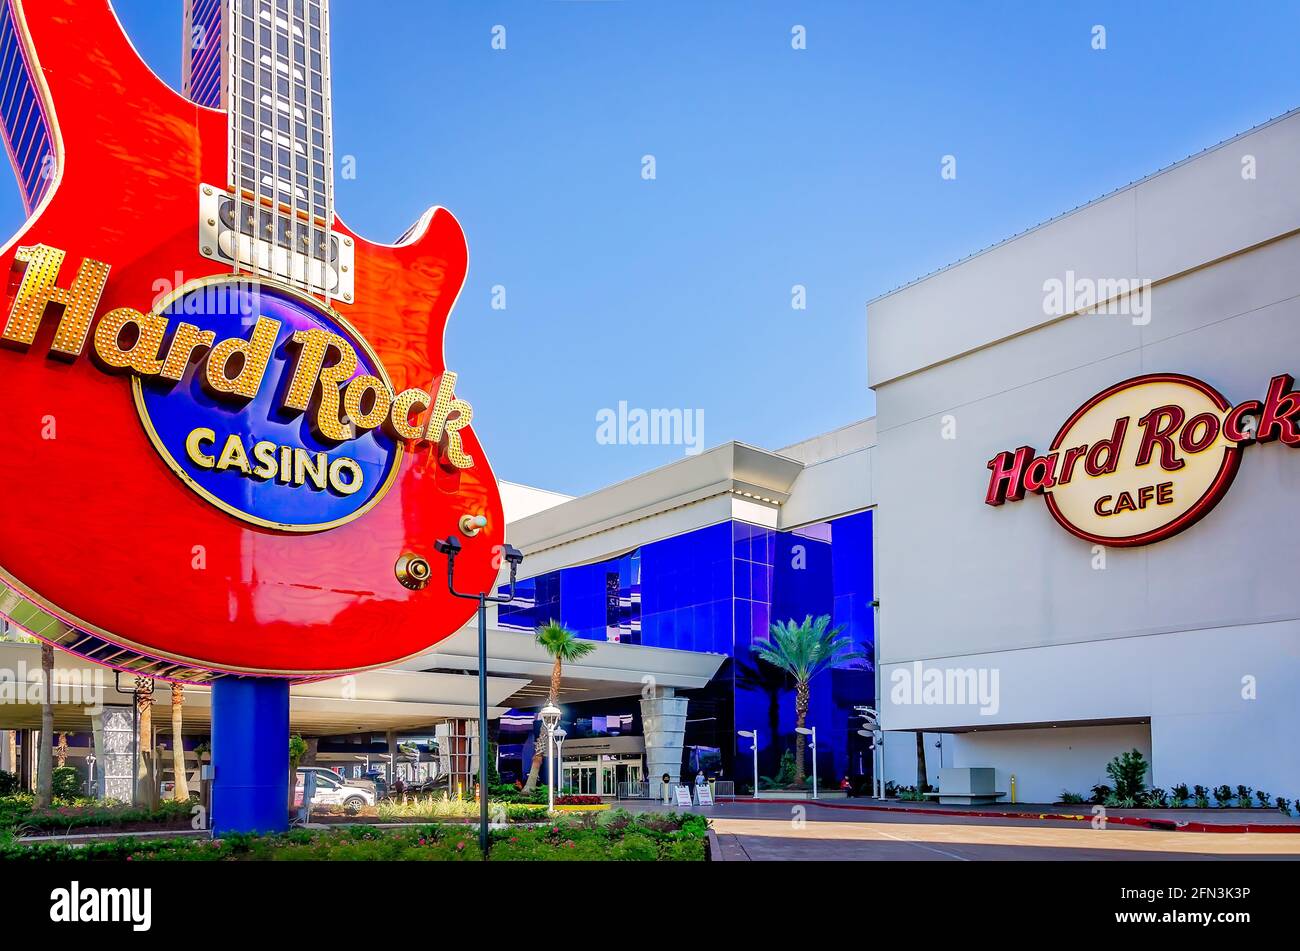 who owns hard rock casino